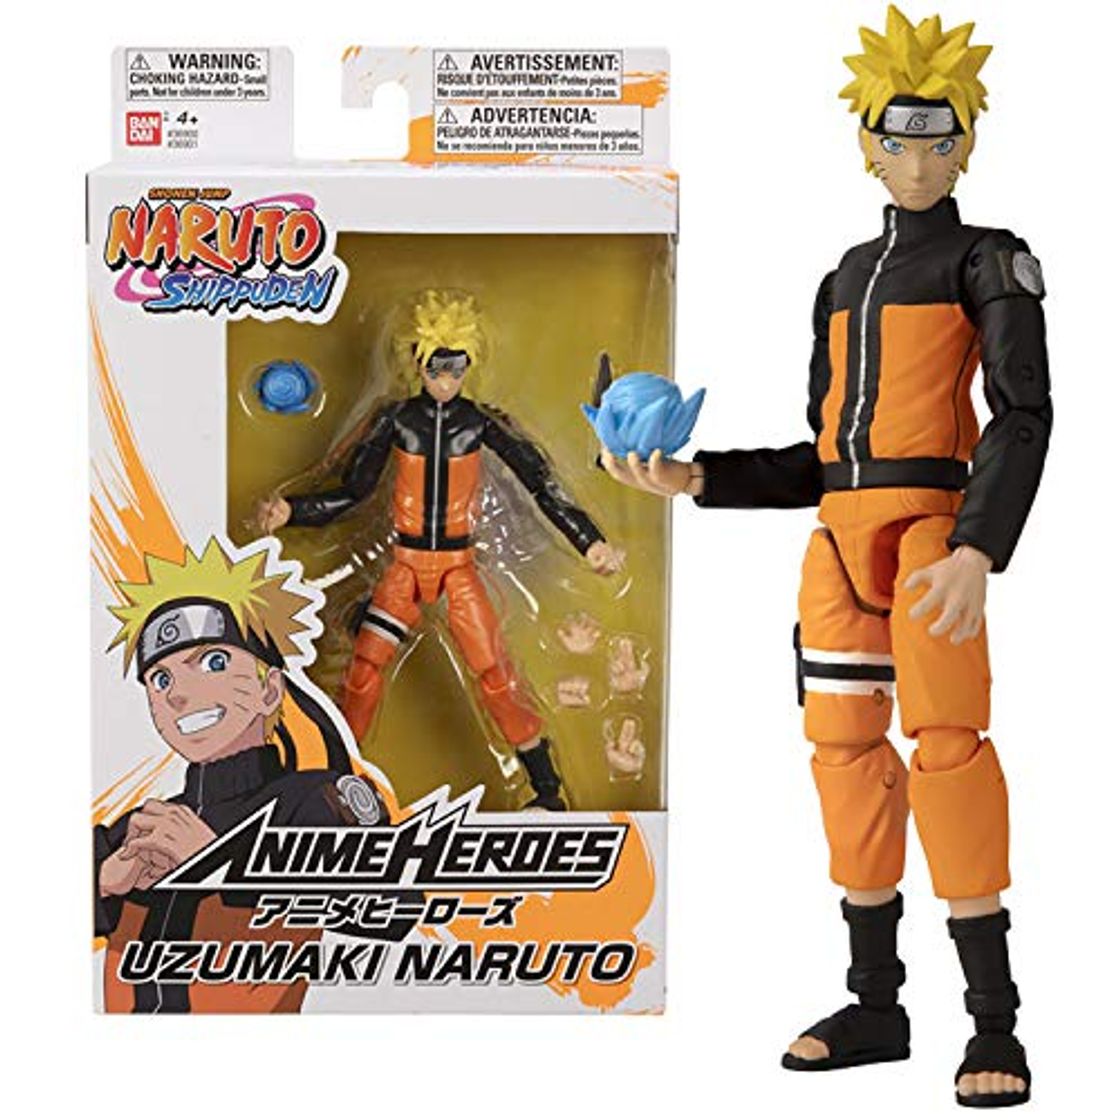 Anime Heroes, Naruto